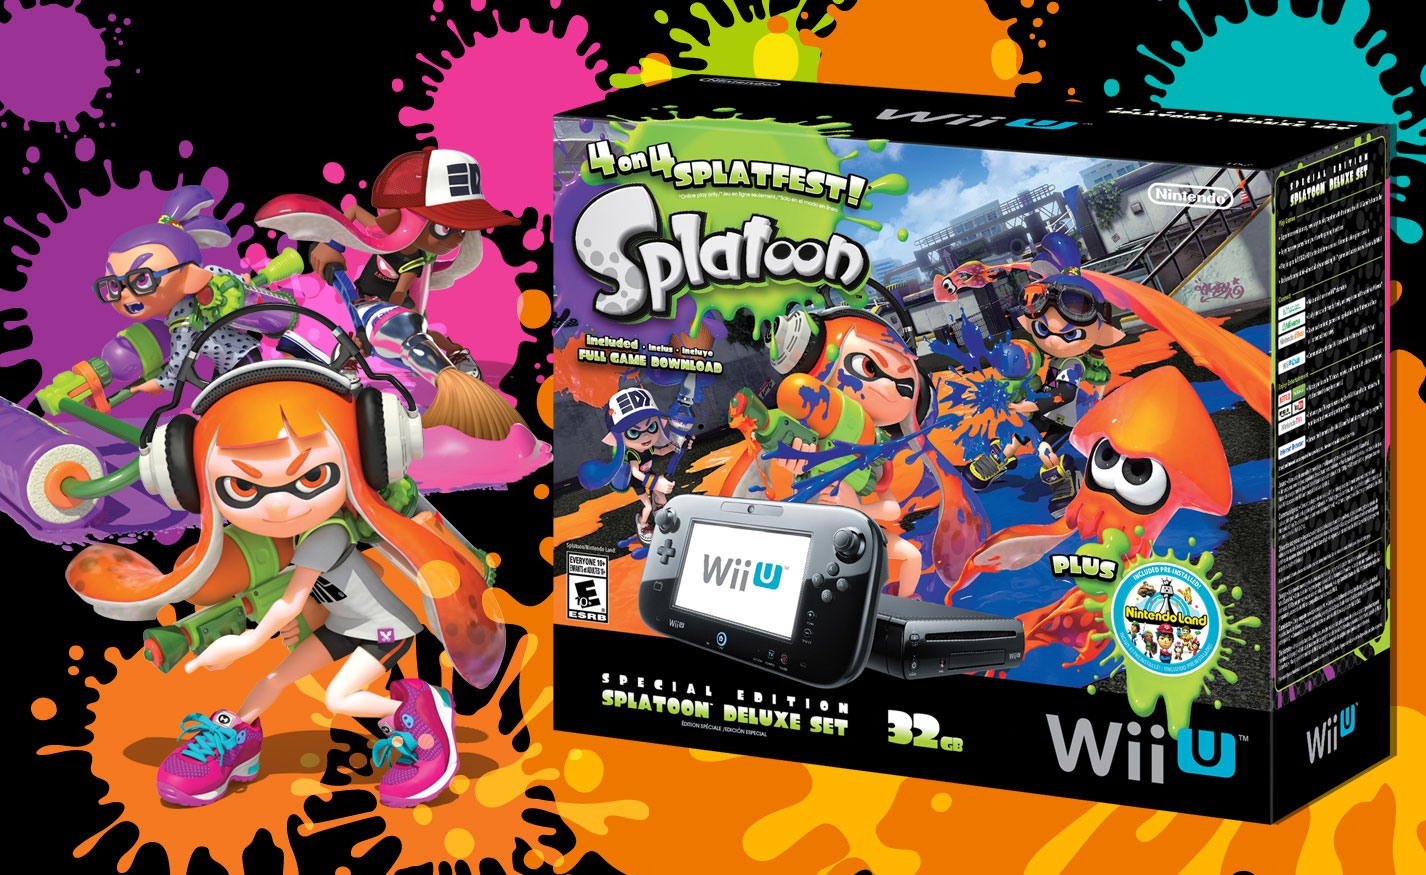  Wii U Super Smash Bros and Splatoon Bundle - Special